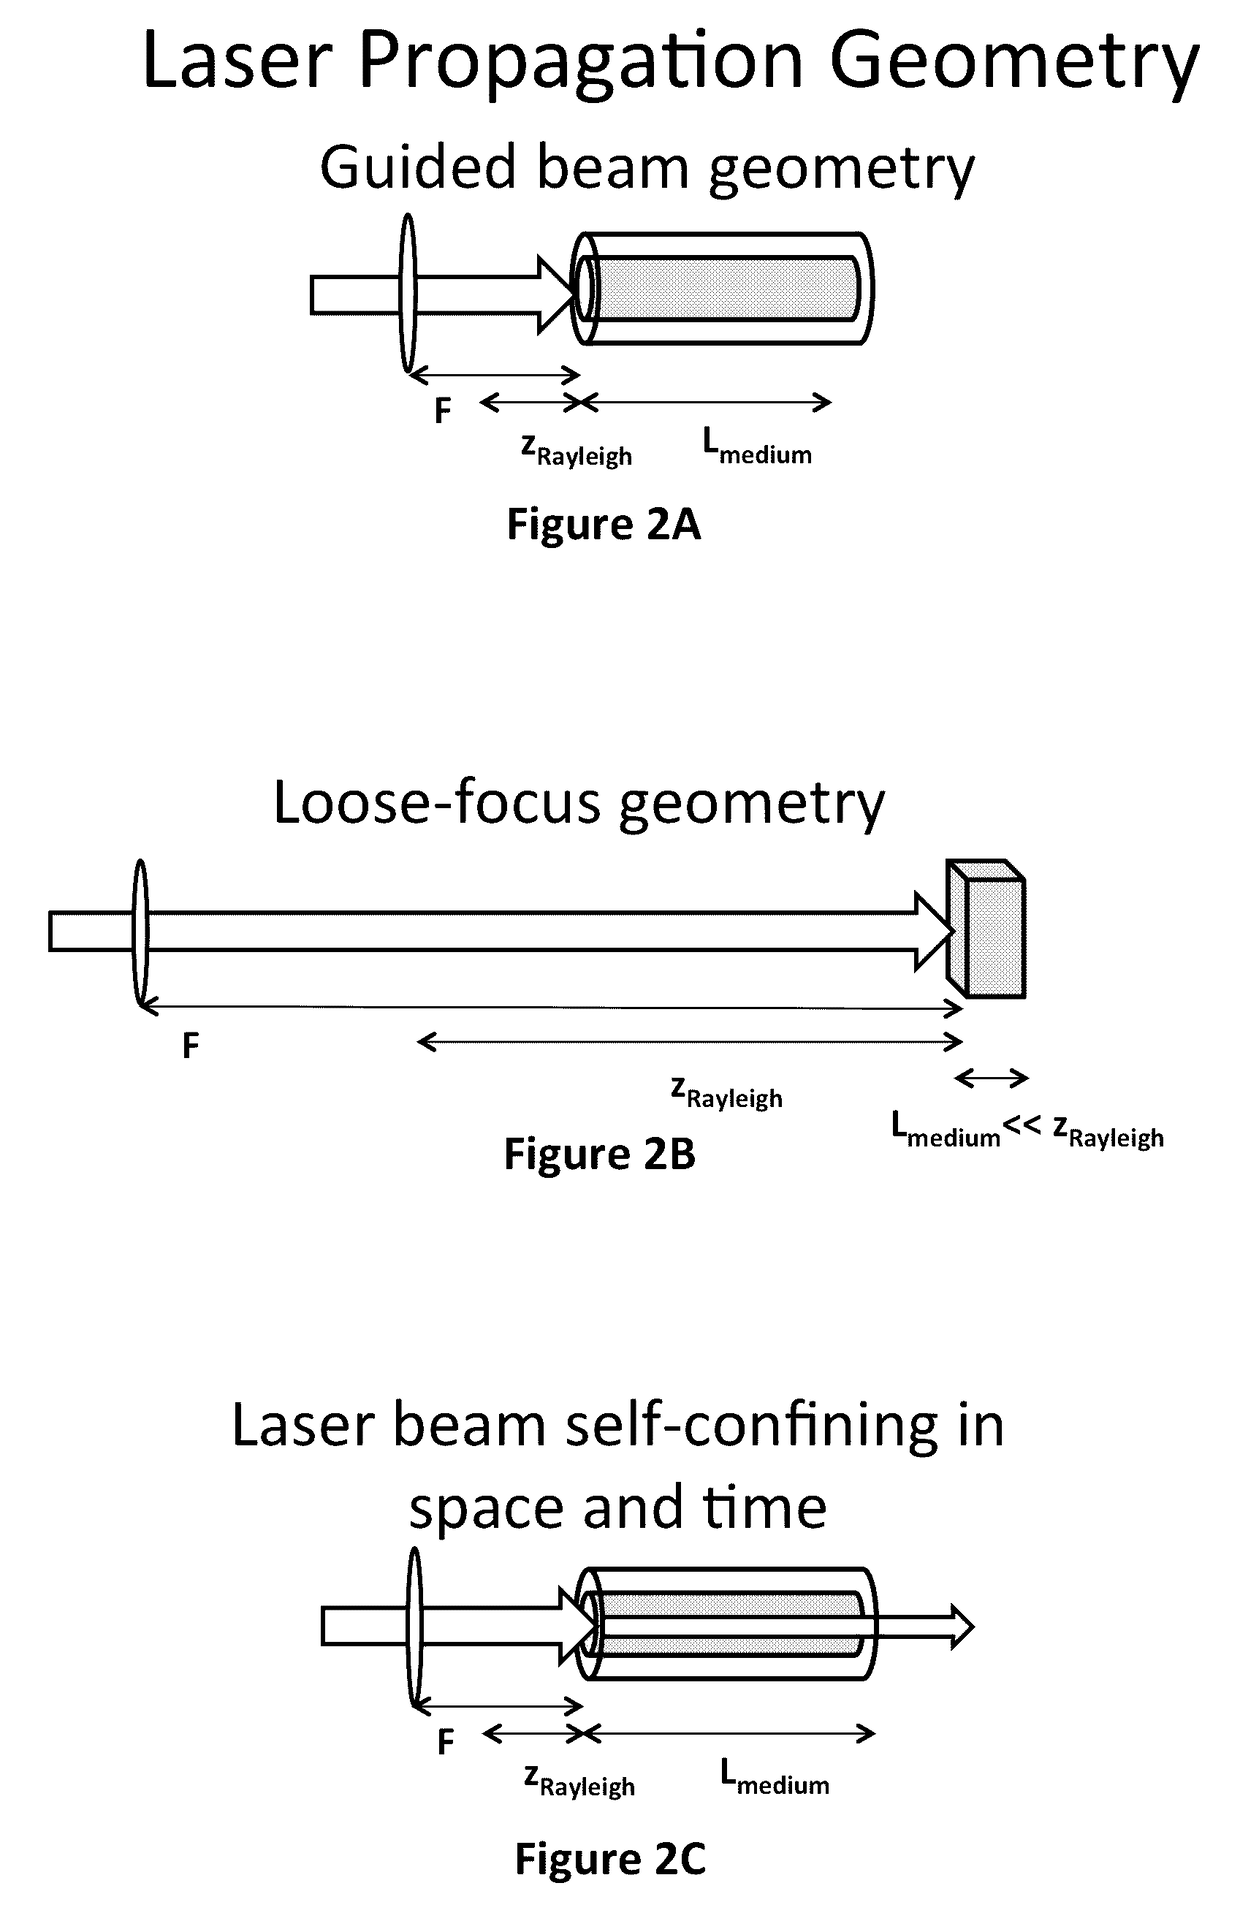 Generation of VUV, EUV, and X-ray light using VUV-UV-VIS lasers